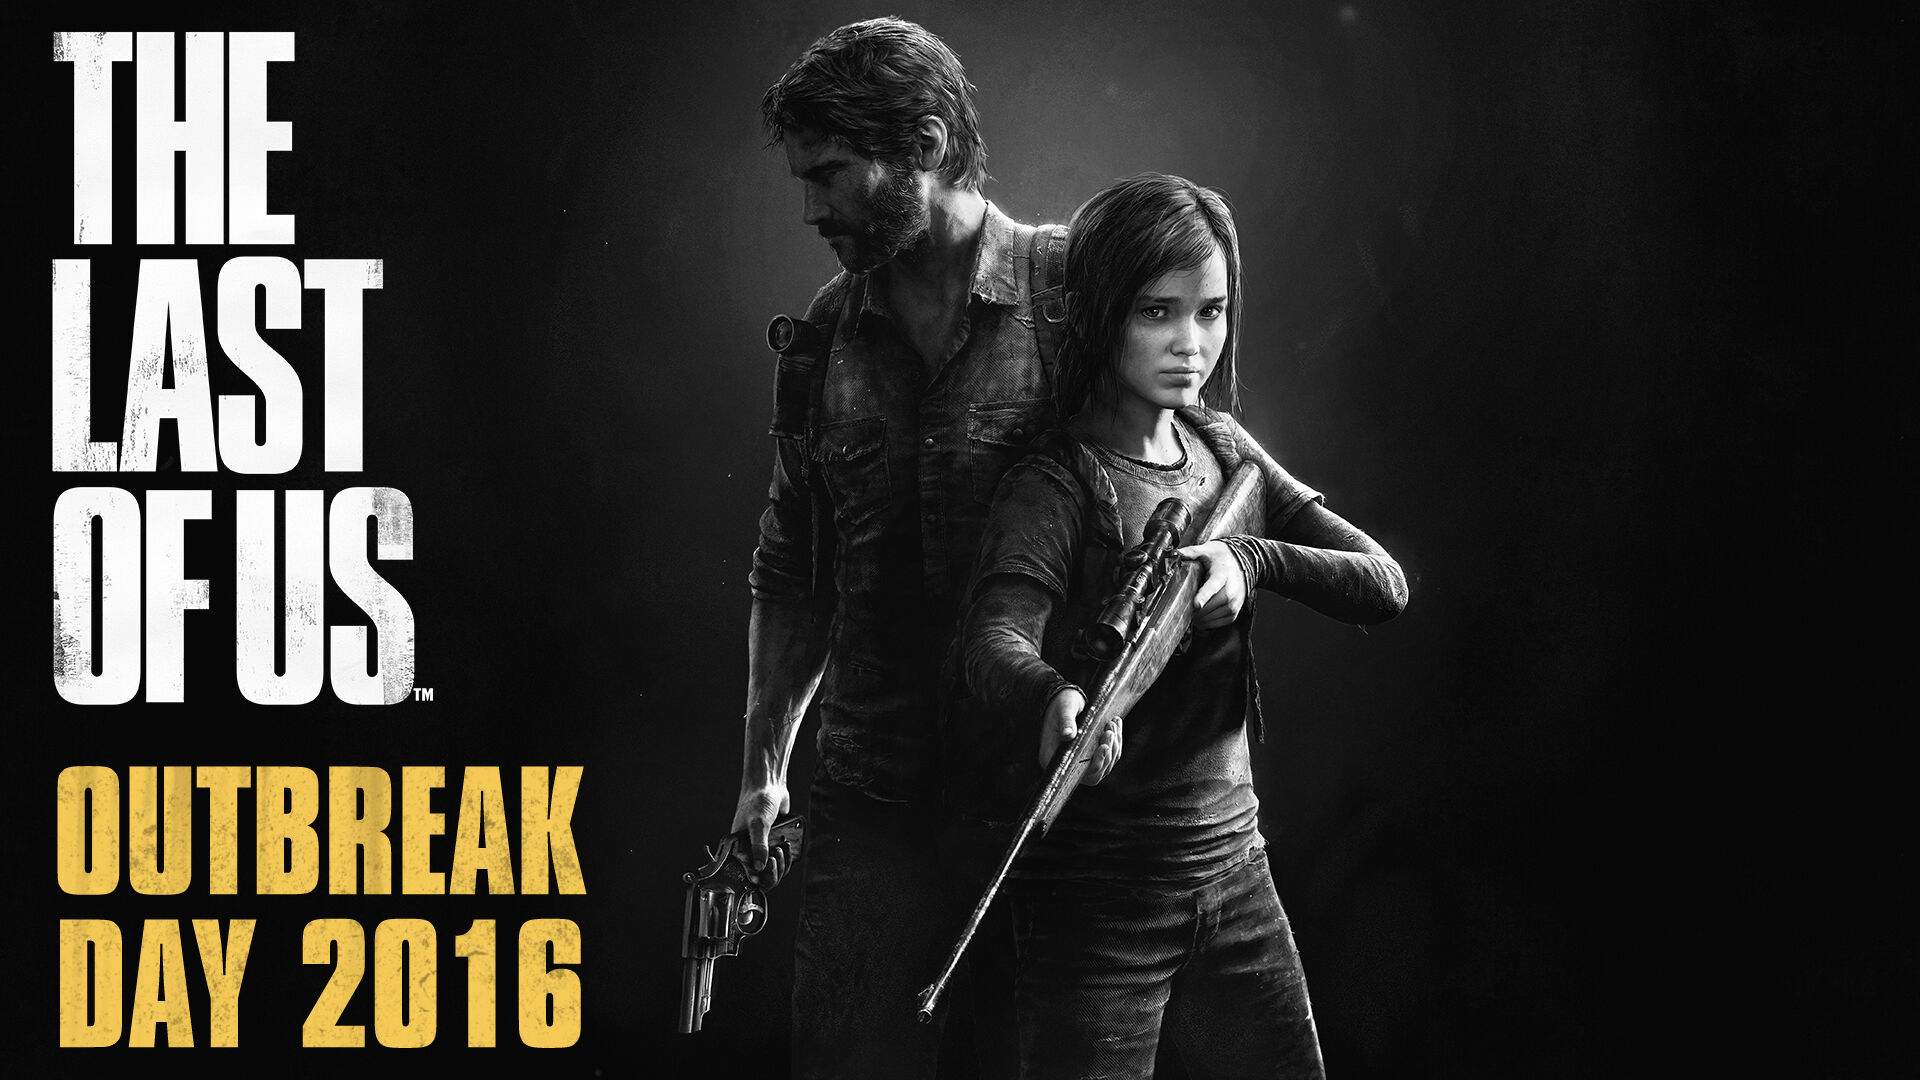 The Last of Us Part II - Ellie Outbreak Day 2018